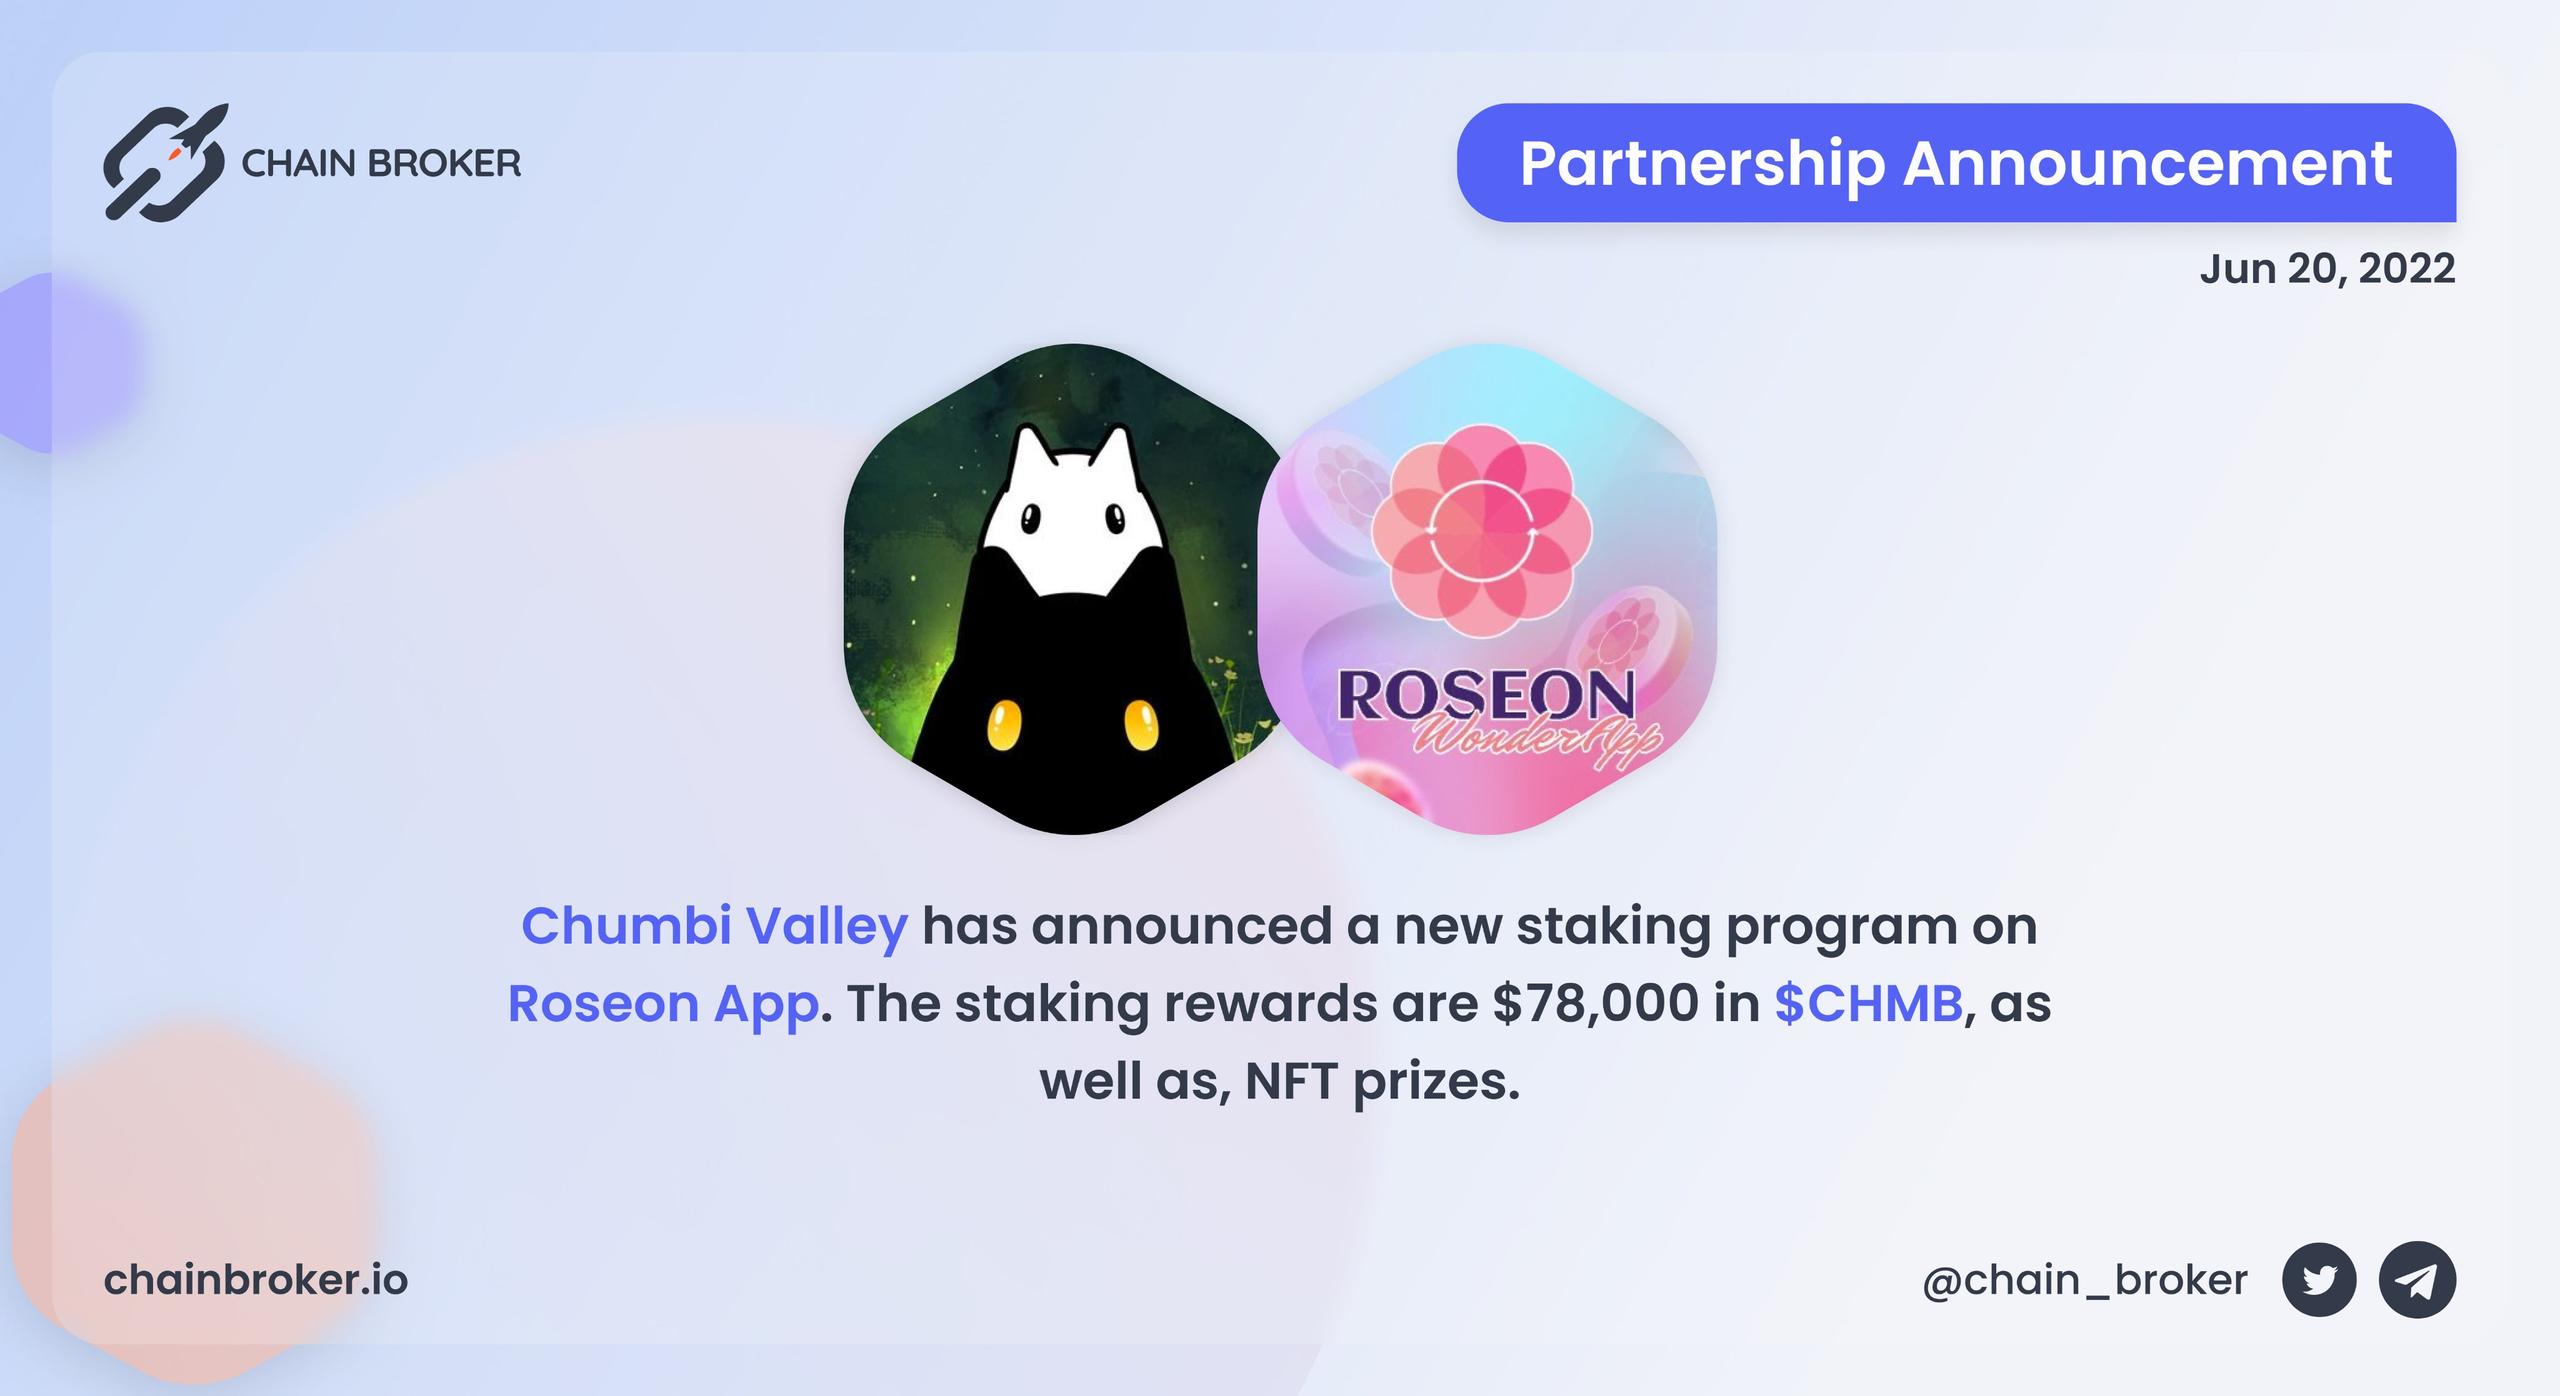 Chumbi Valley and Roseon partnership